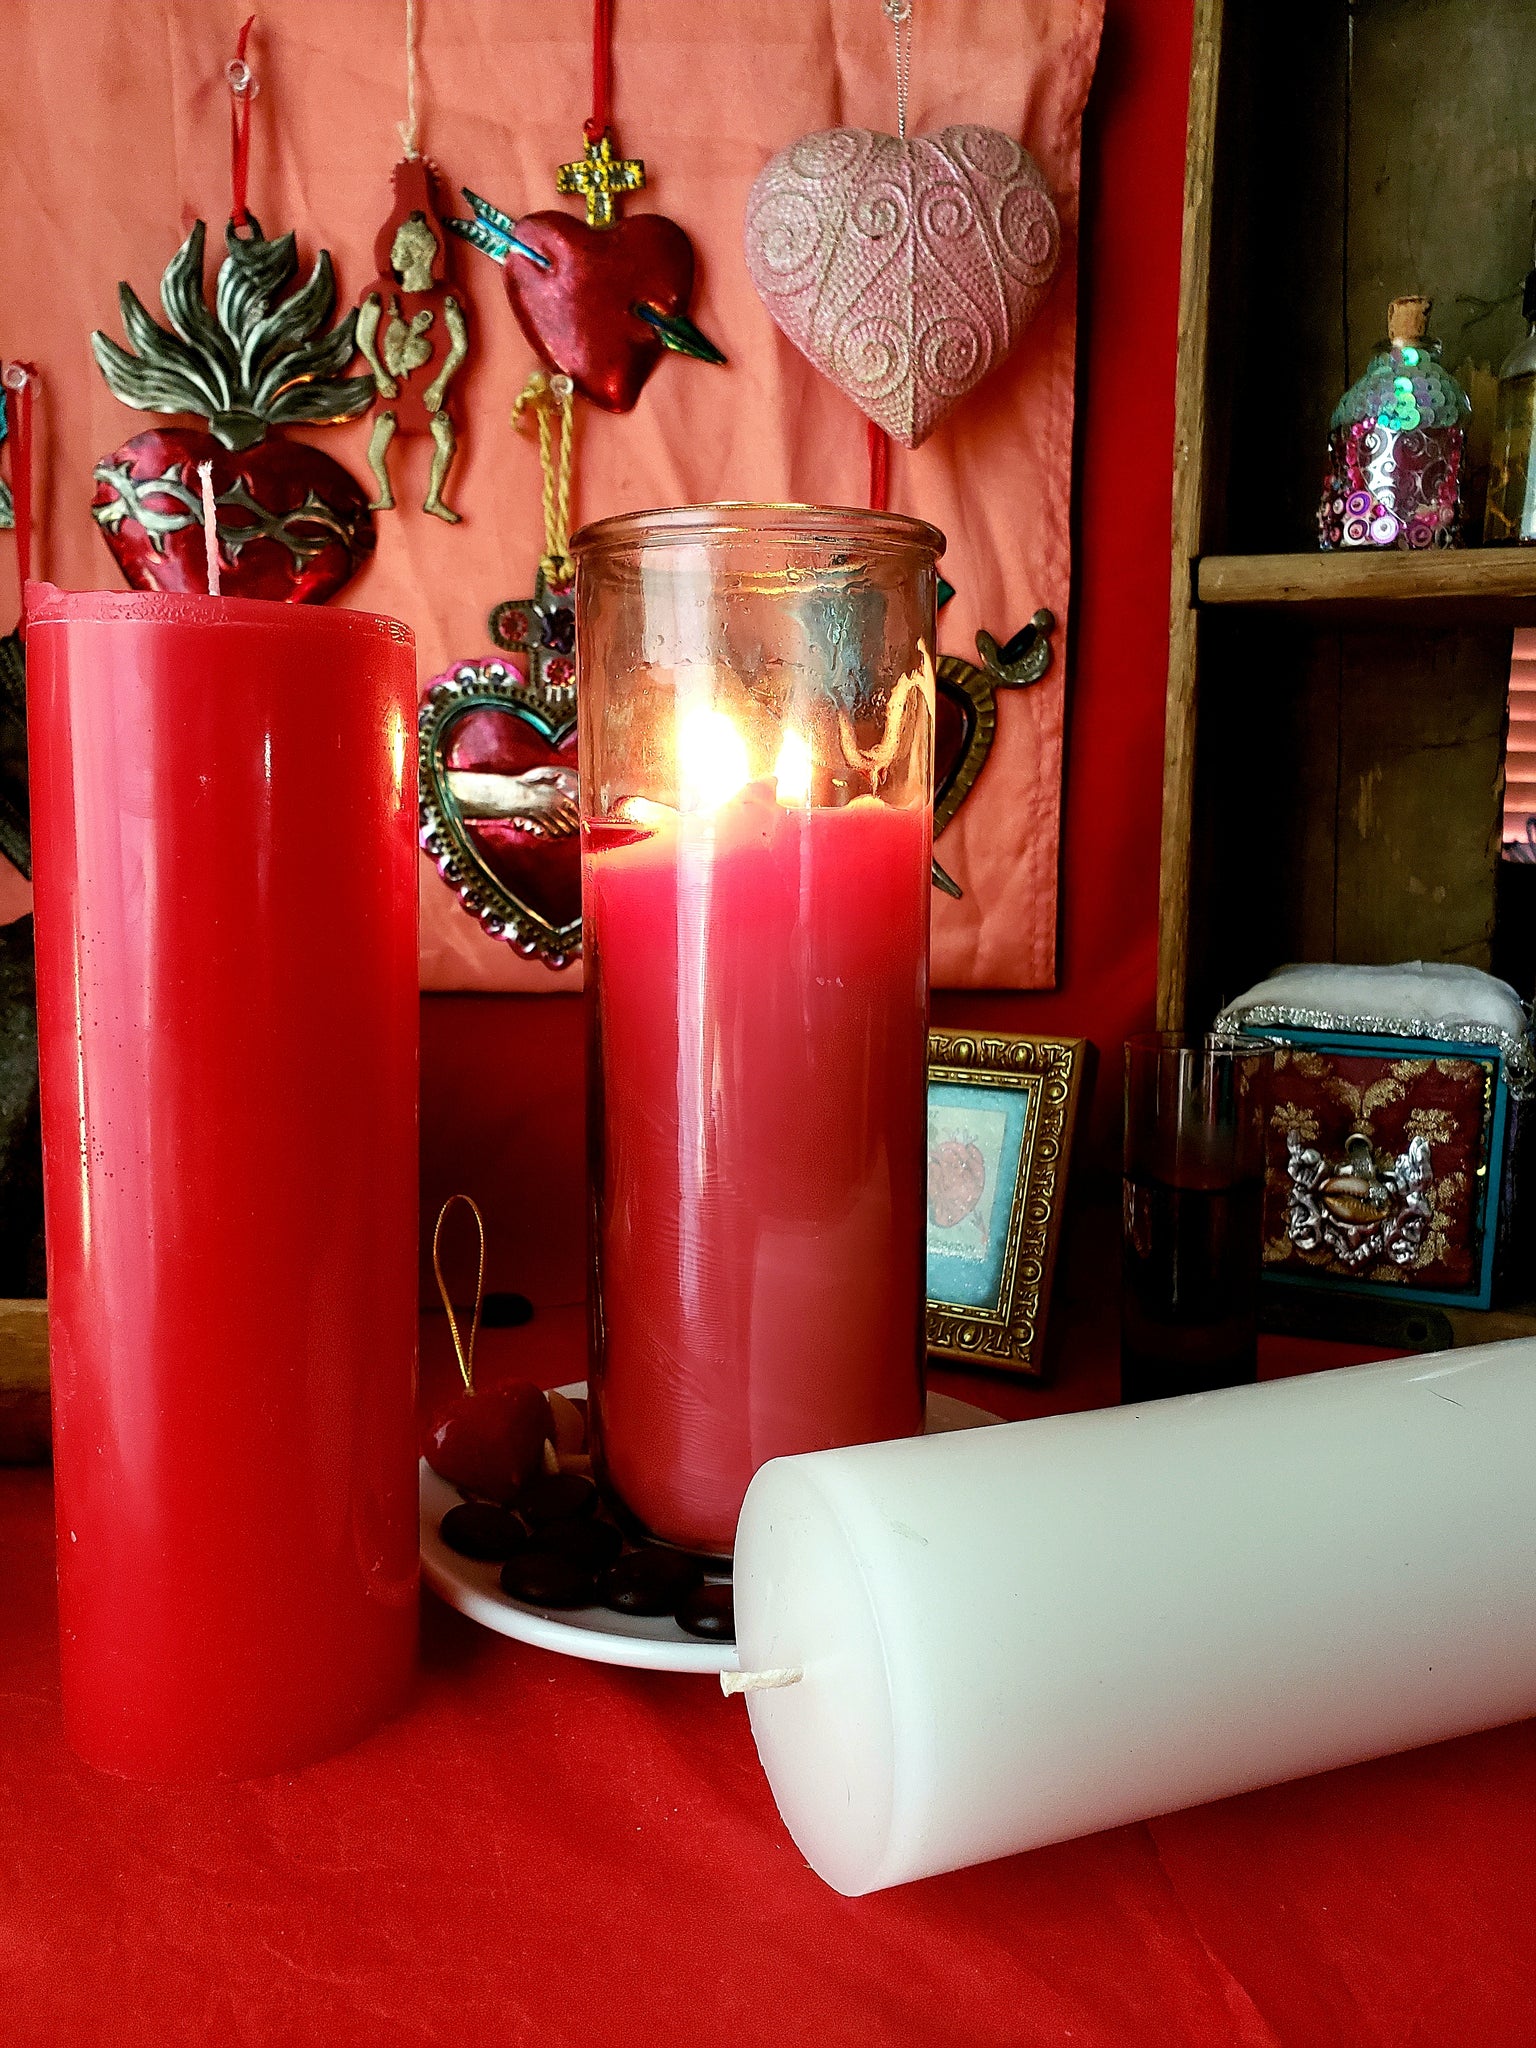 Handblown Candle Refill – Chez Lapin